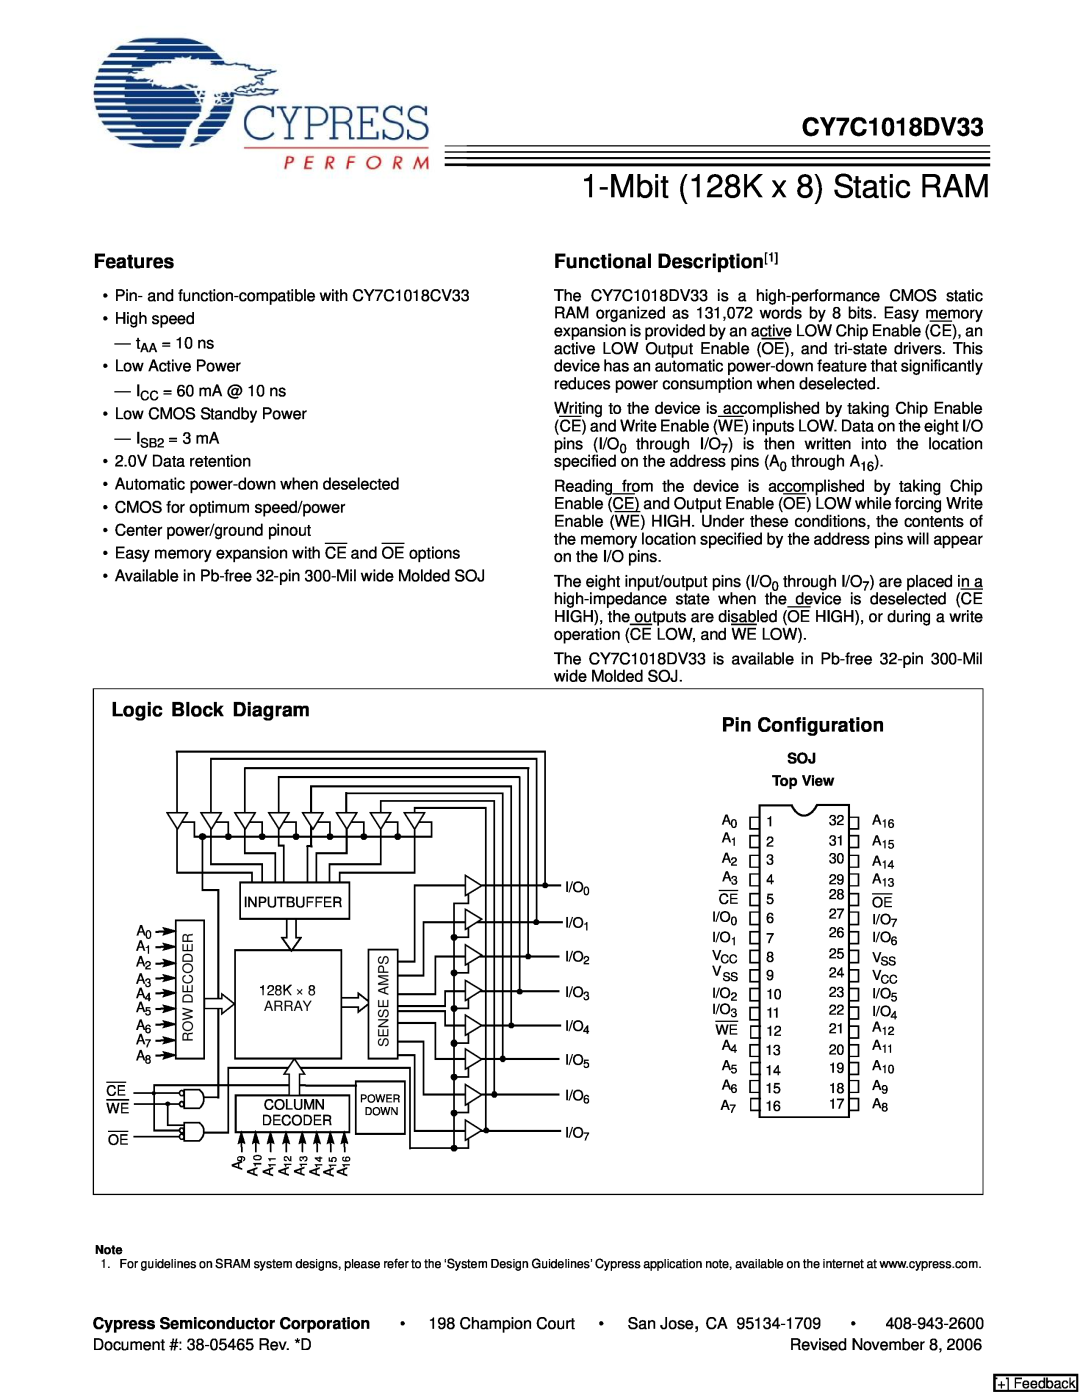 Cypress CY7C1018DV33 manual Features, Functional Description1, Logic Block Diagram, Pin Configuration 